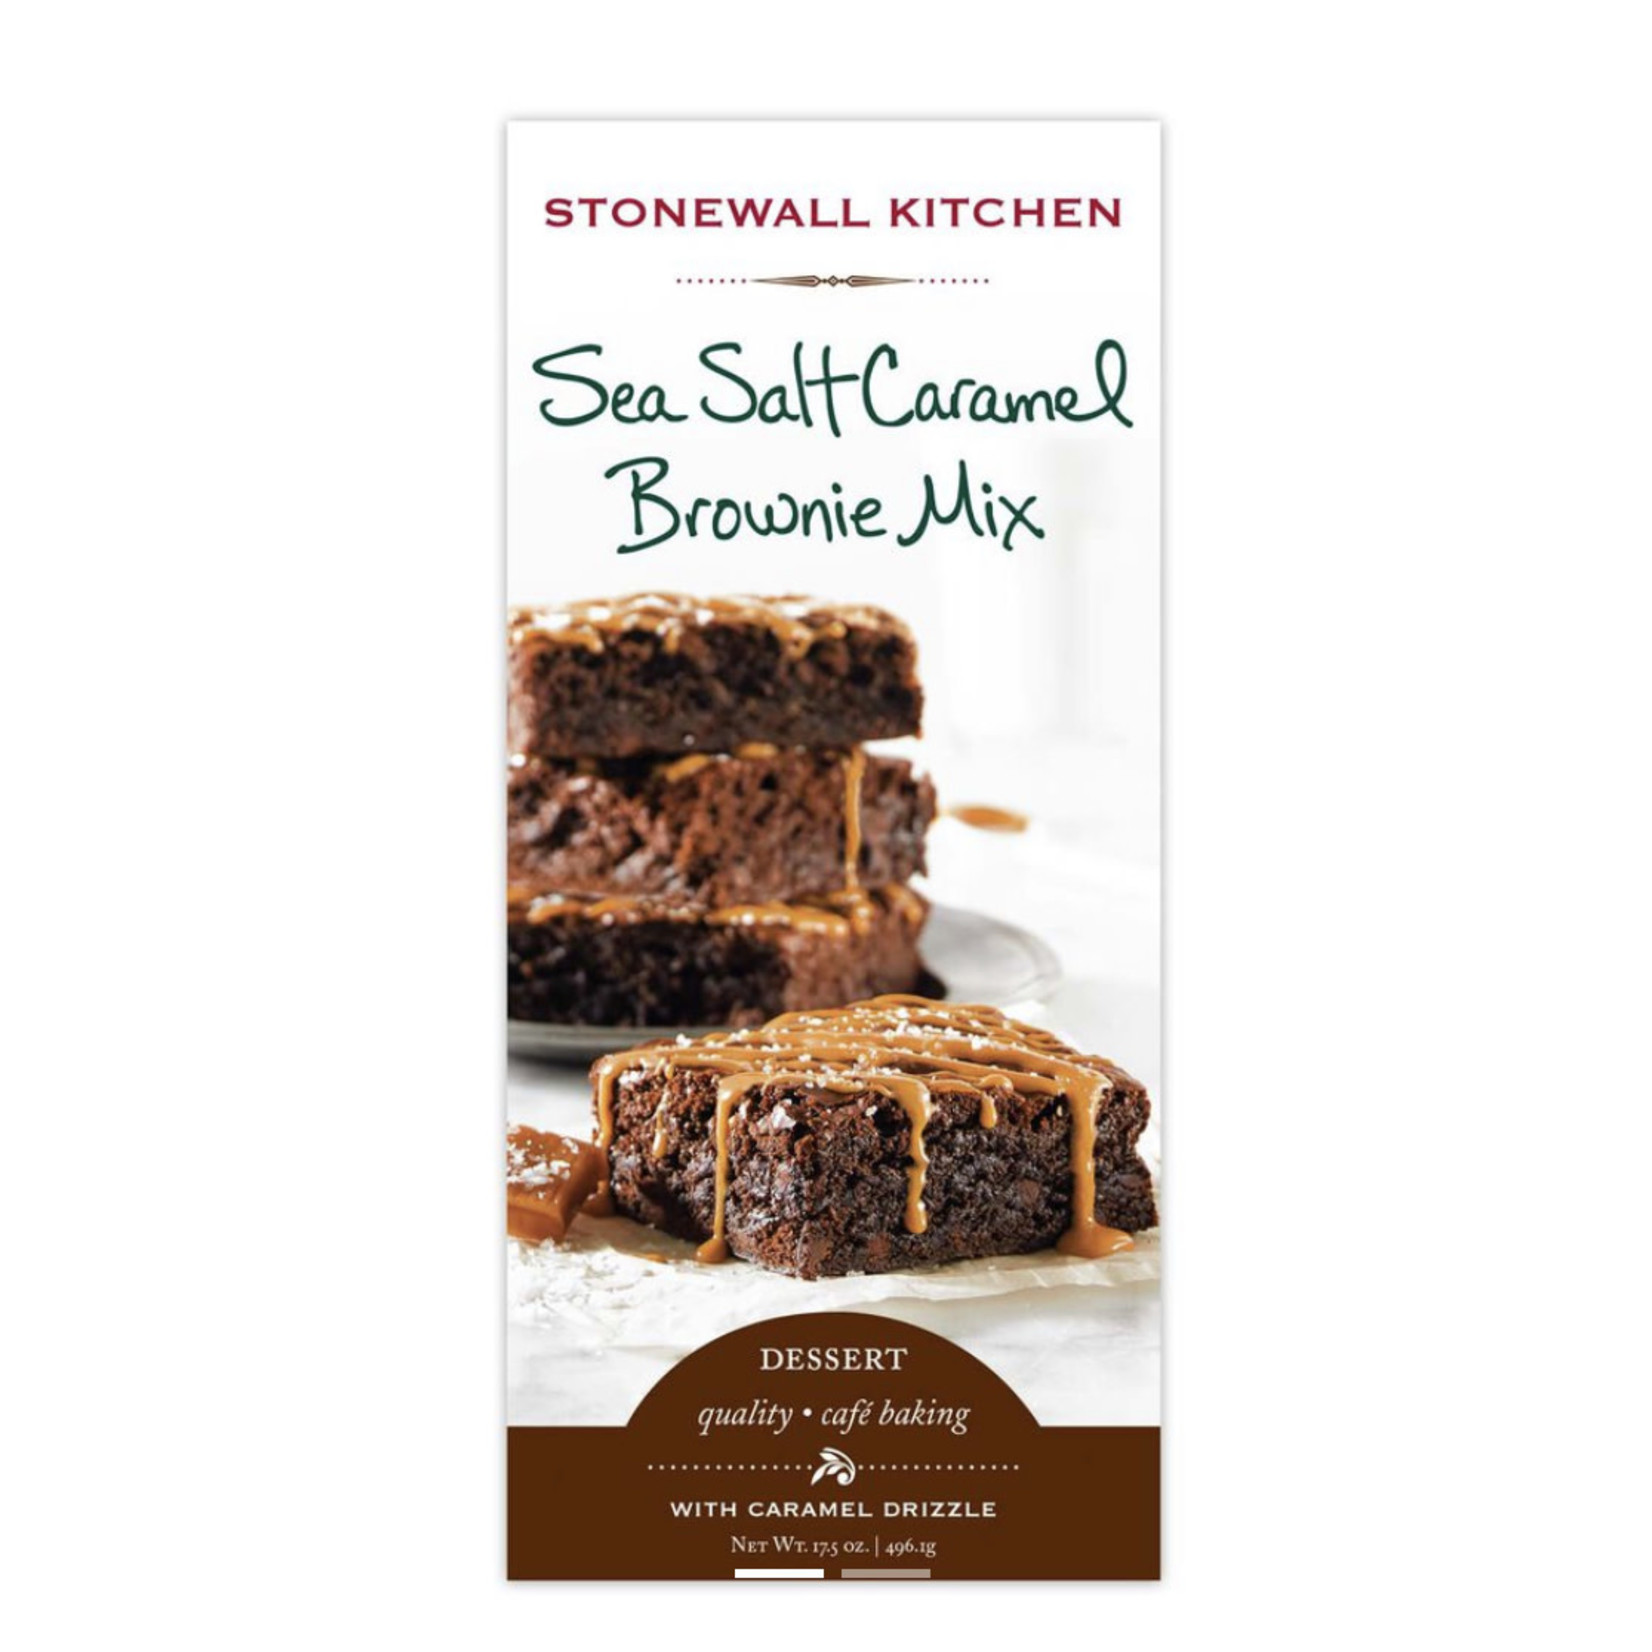 Stonewall Kitchen Stonewall Kitchen Sea Salt Caramel Brownie Mix